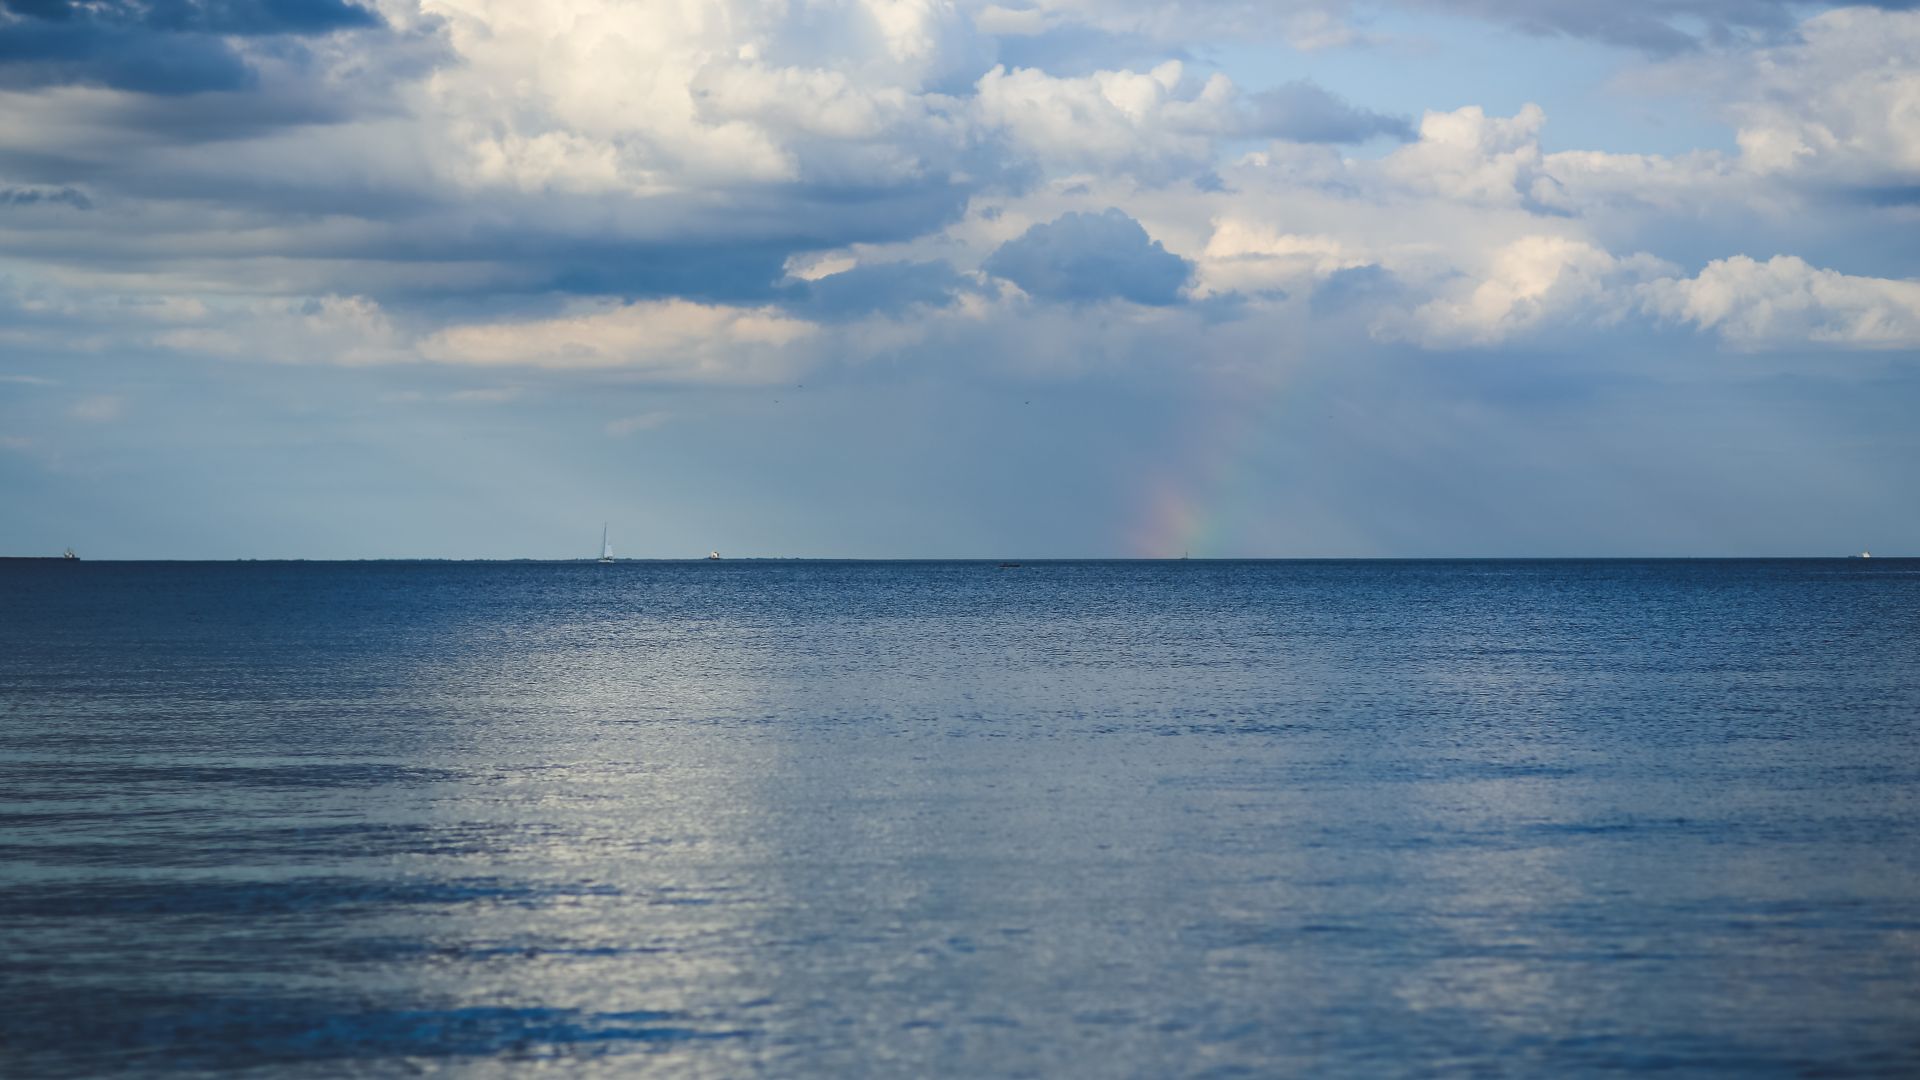 Балтийское море, 5k, 4k, 8k, горизонт, небо, облака, радуга, Baltic sea, 5k, 4k wallpaper, 8k, horizon, sky, clouds, rainbow (horizontal)